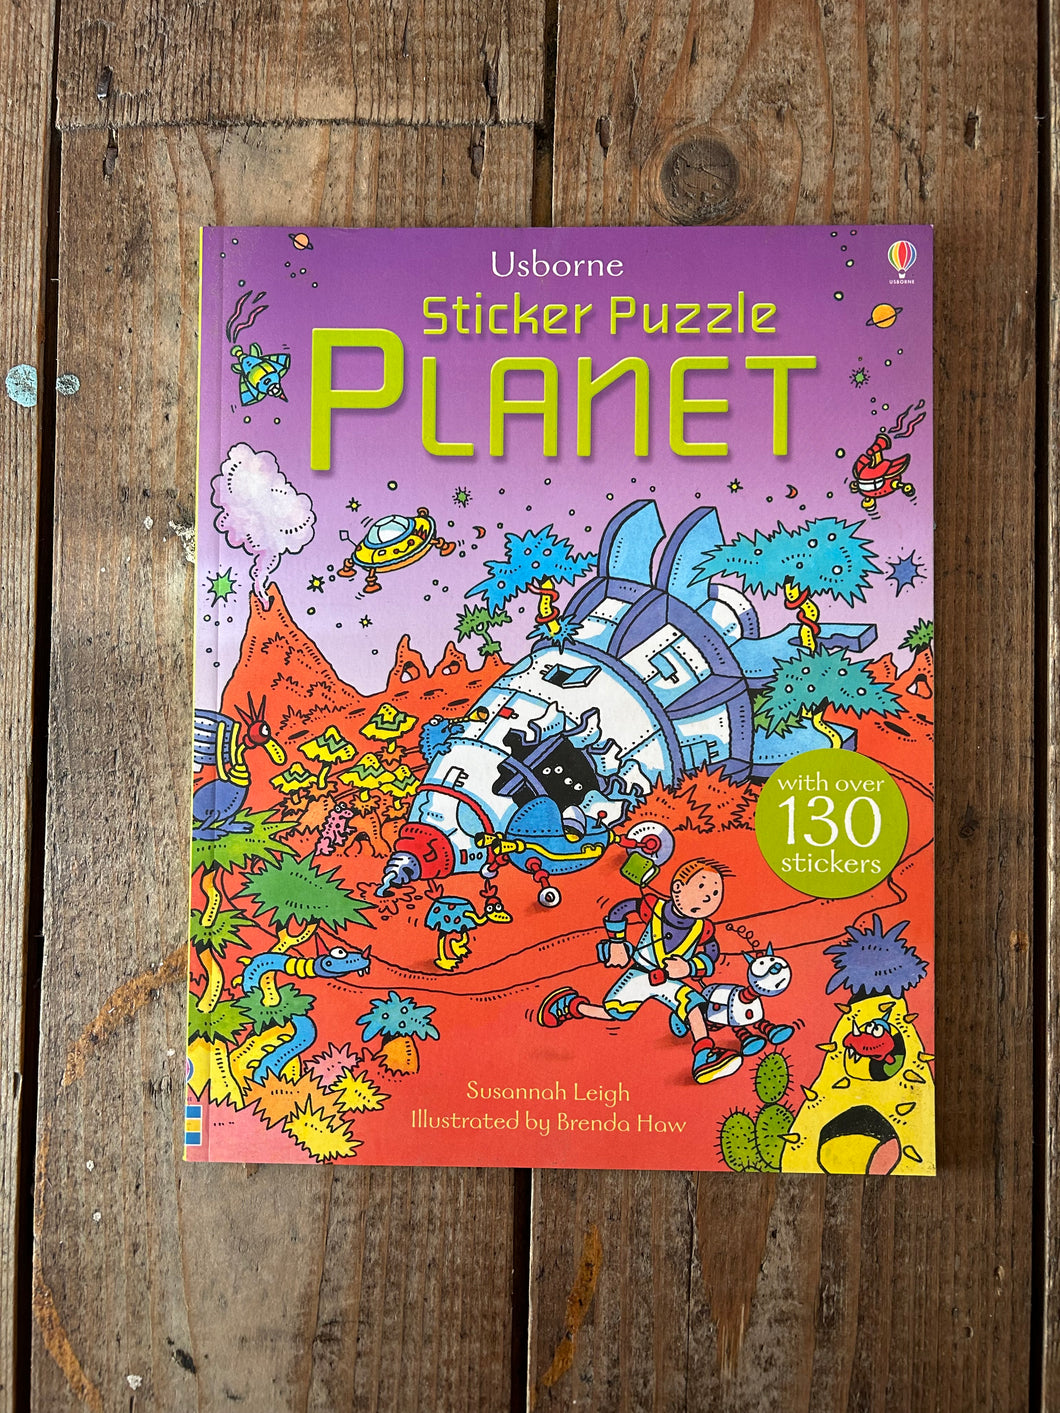 Usborne sticker puzzle planet